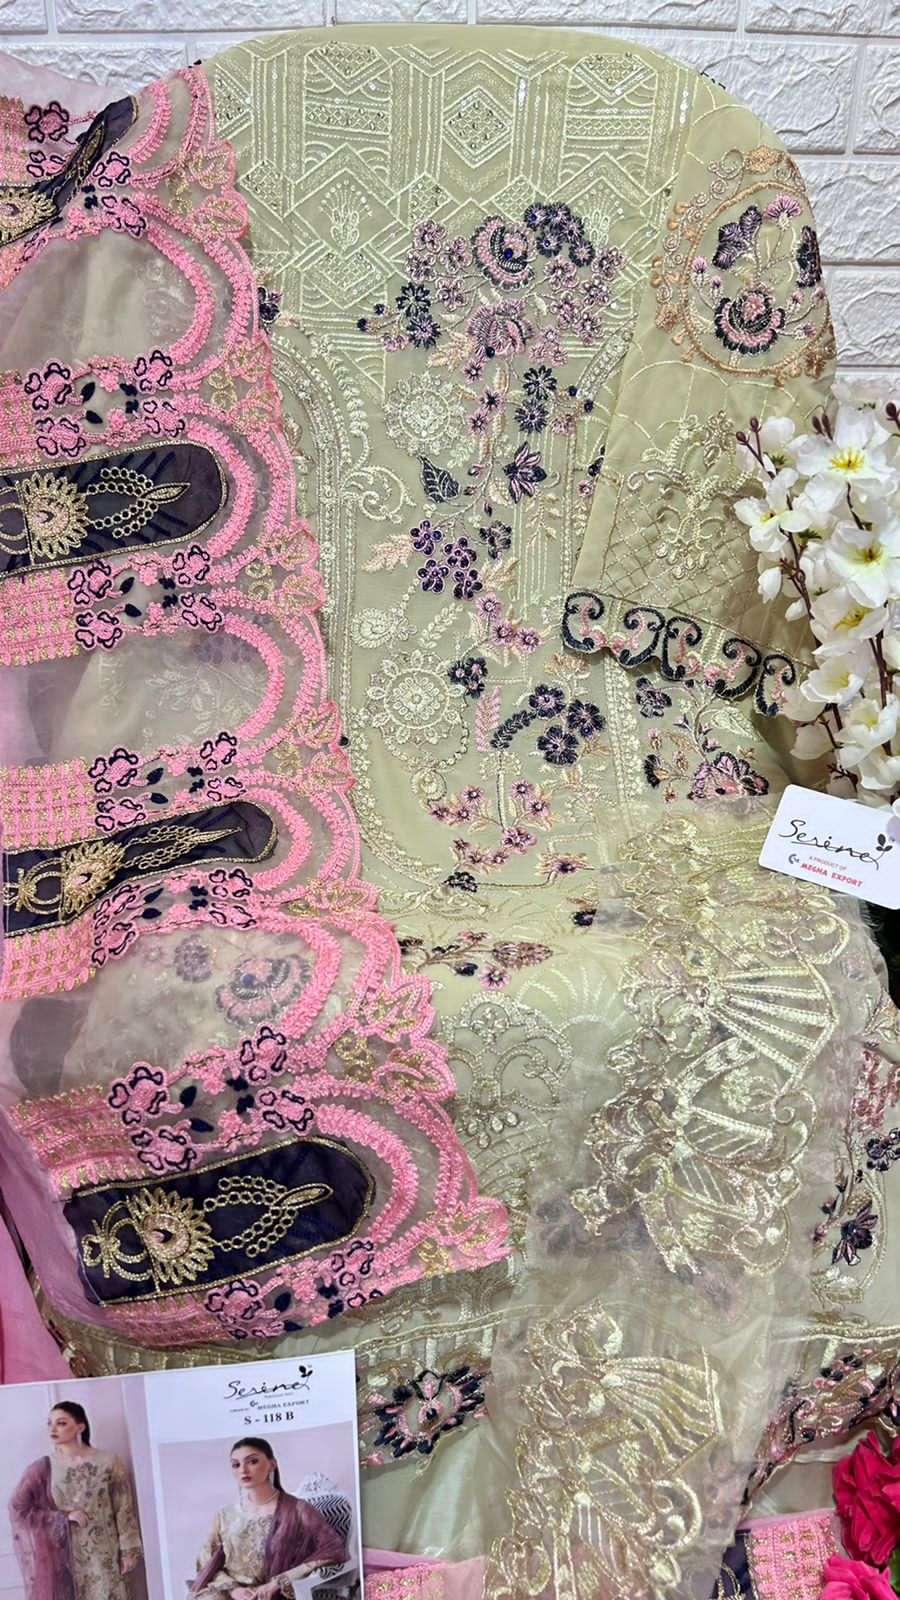 serine 118 series georgette designer pakistani salwar suits wholesale price surat